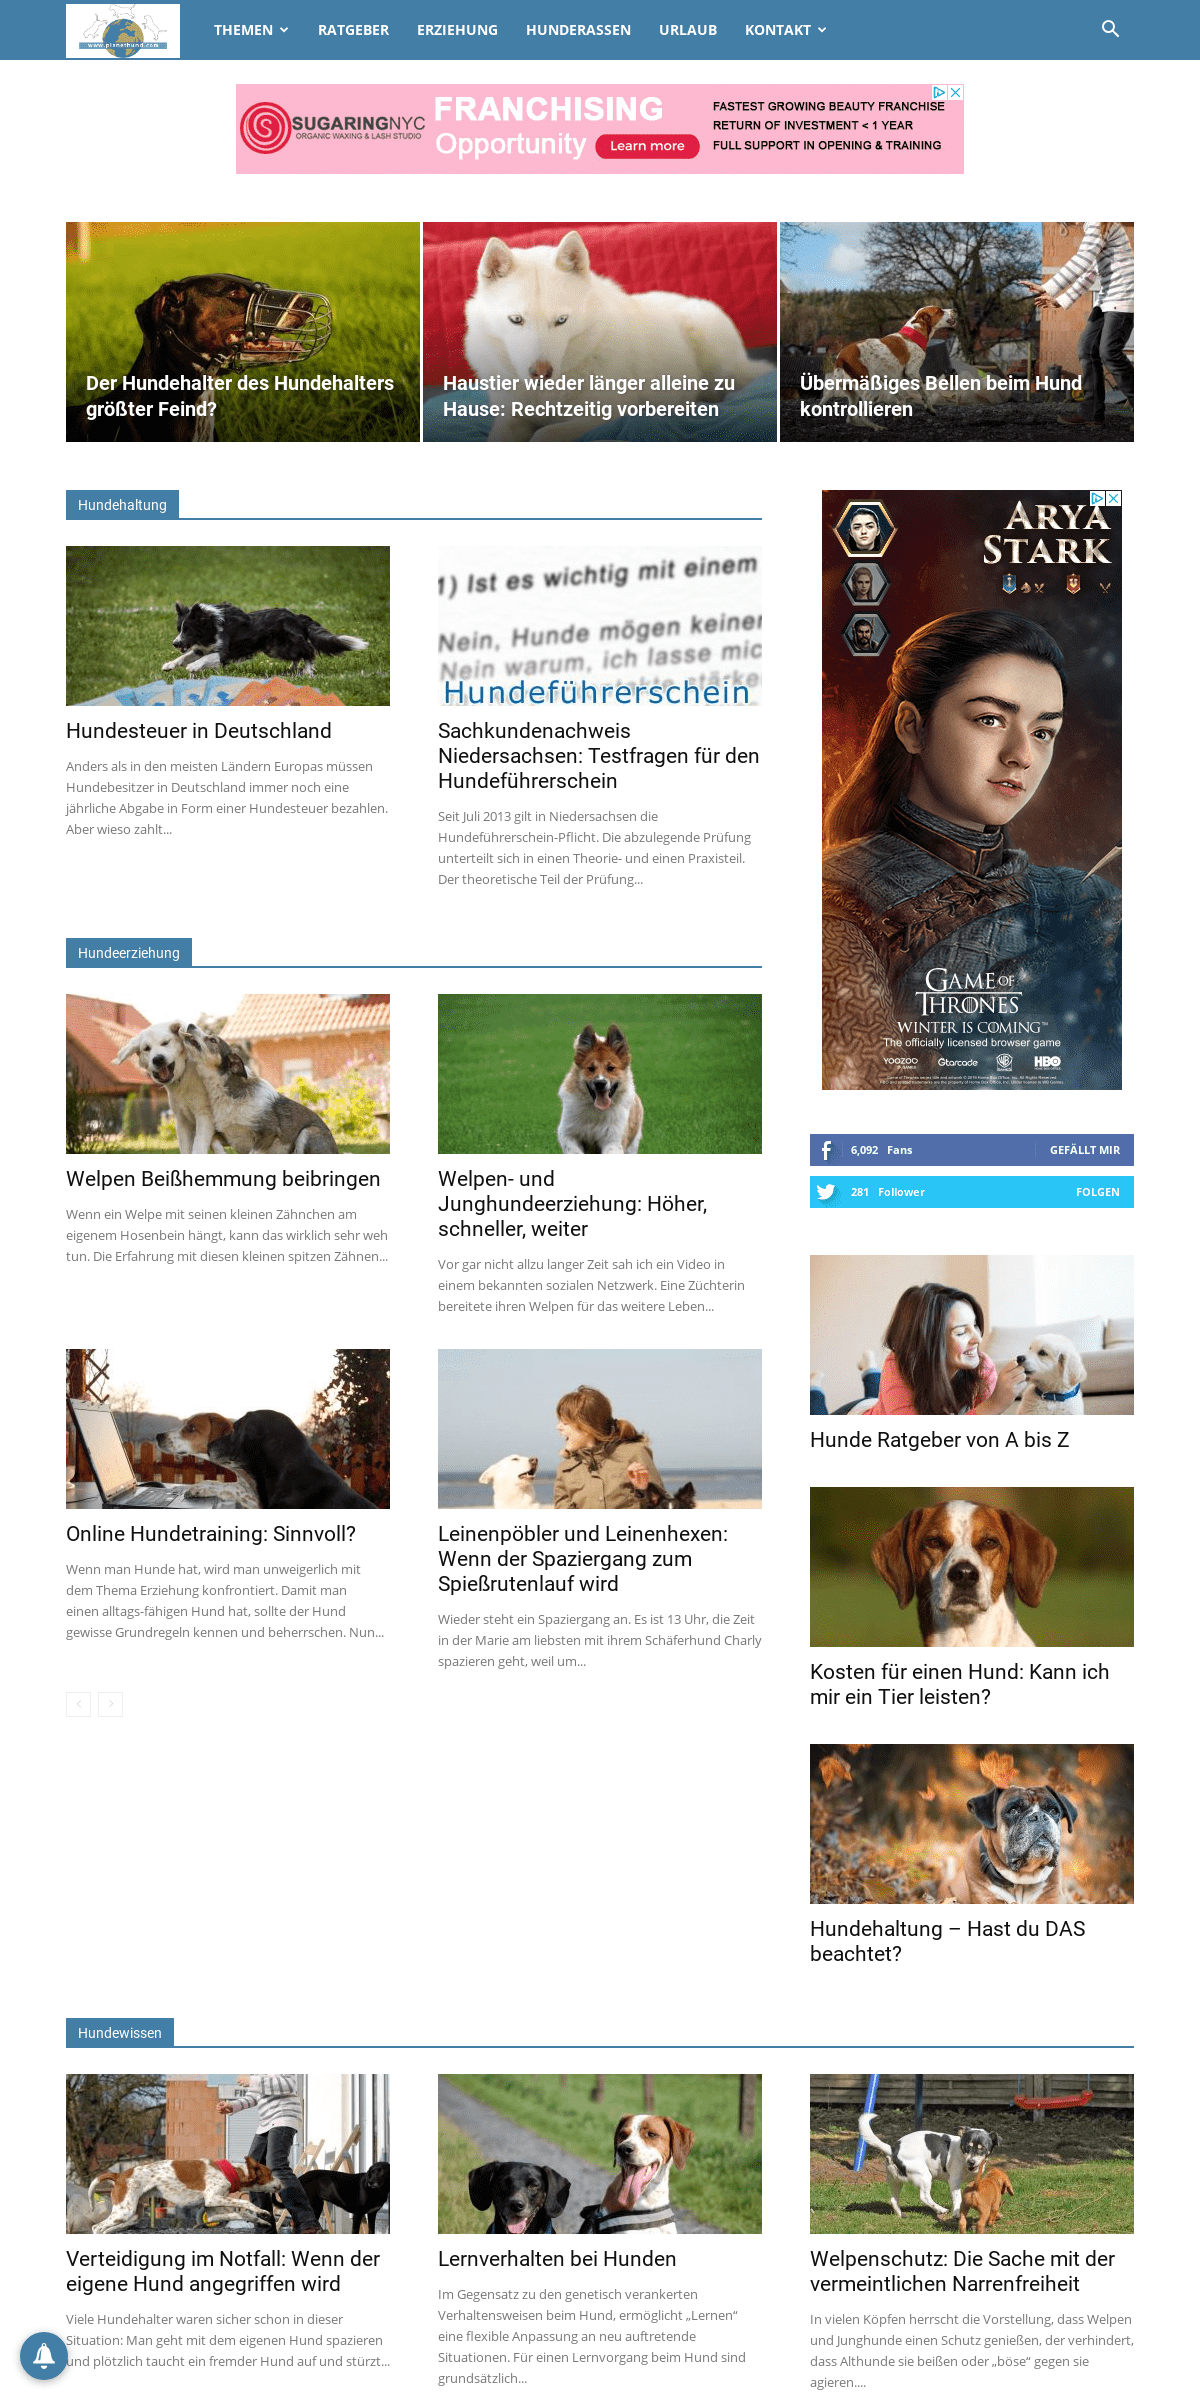 A complete backup of planethund.com